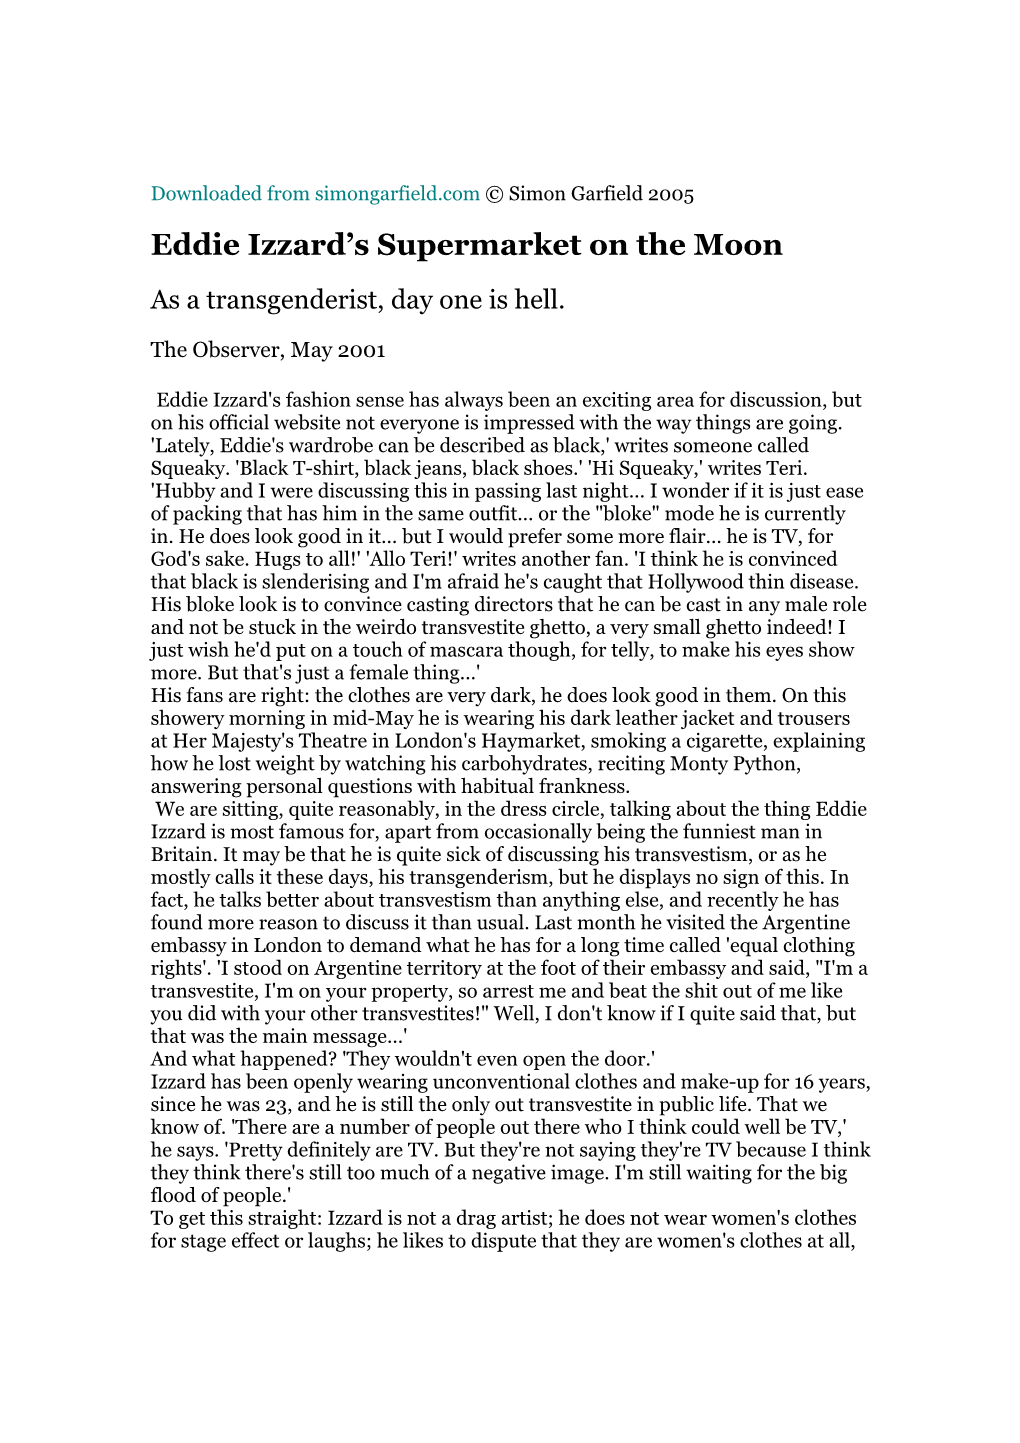 Eddie Izzard's Supermarket on the Moon